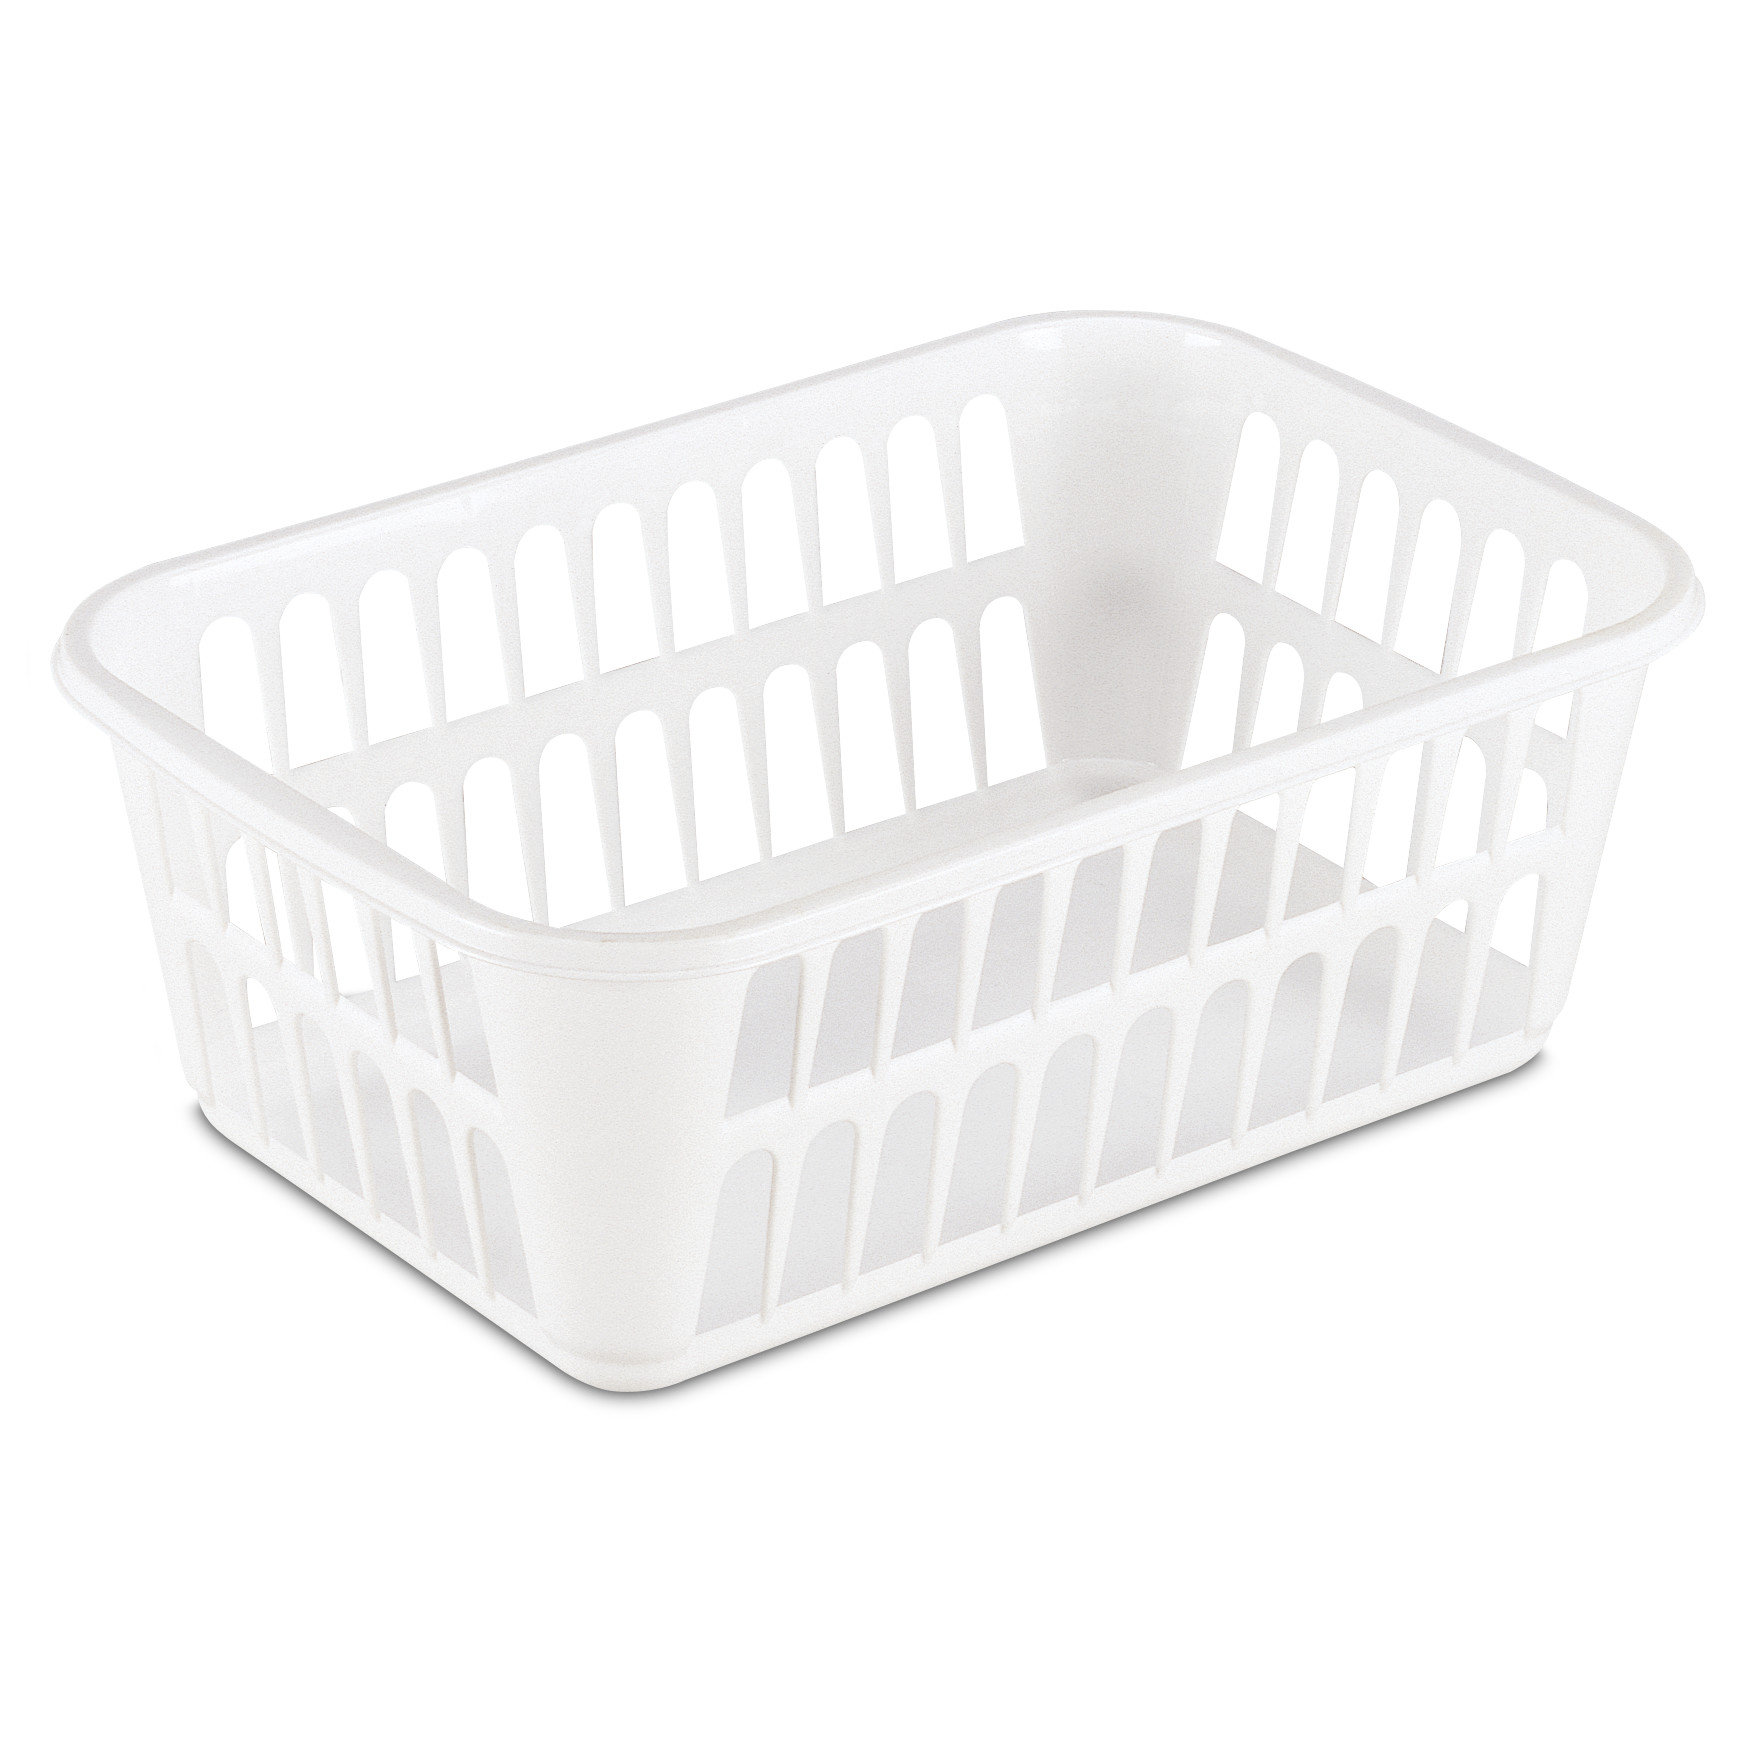 Sterilite Storage Basket Plastic, White, Set of 16 - image 2 of 9